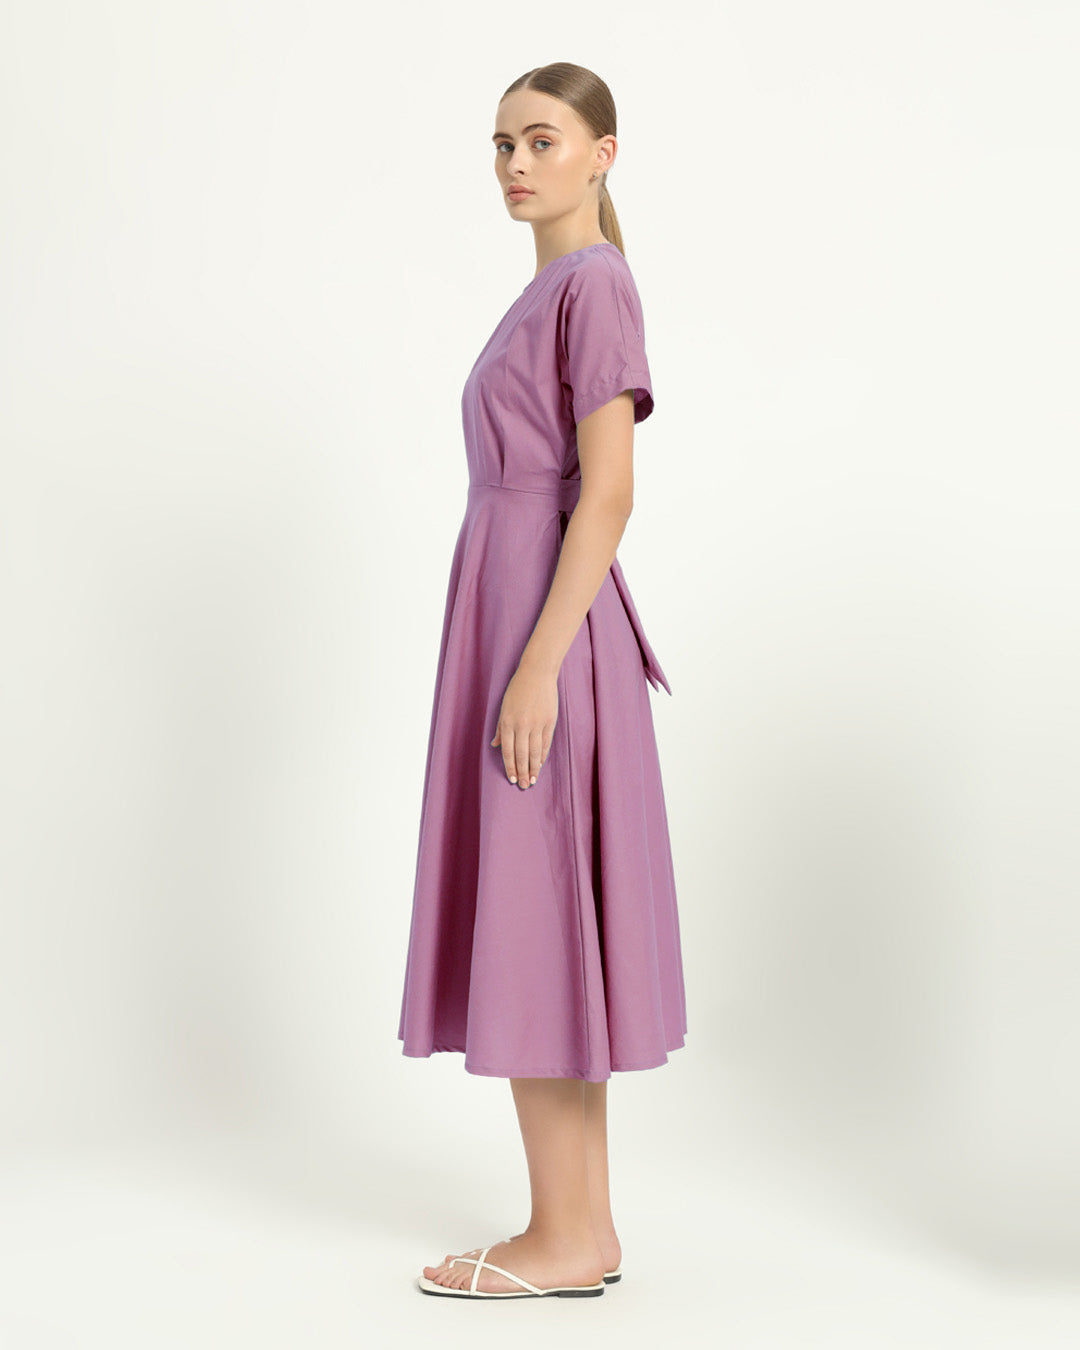 The Griffen Purple Swirl Cotton Dress